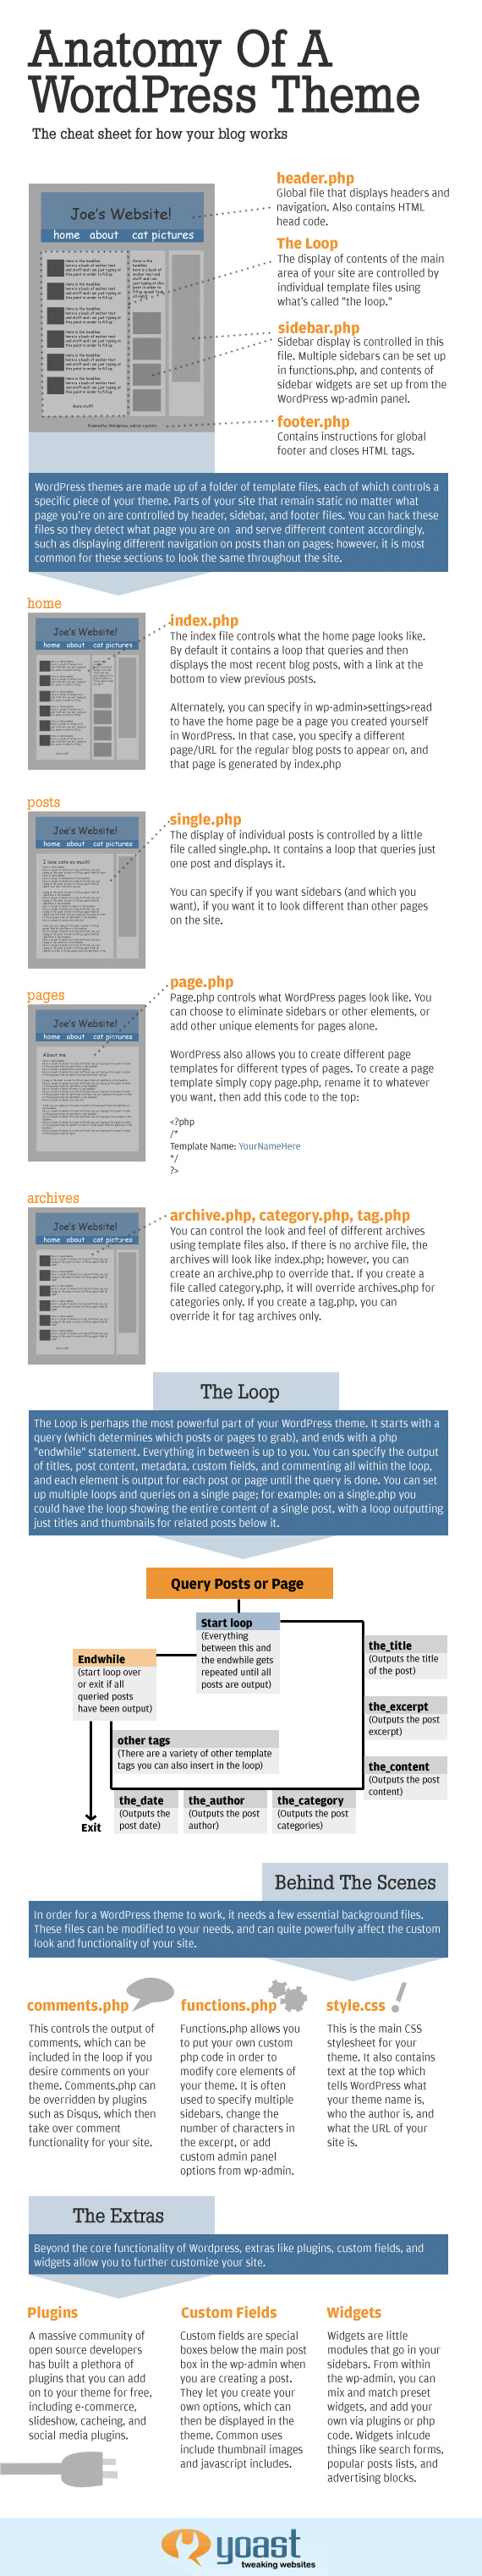 Infographie - Anatomie d'un thème Wordpress